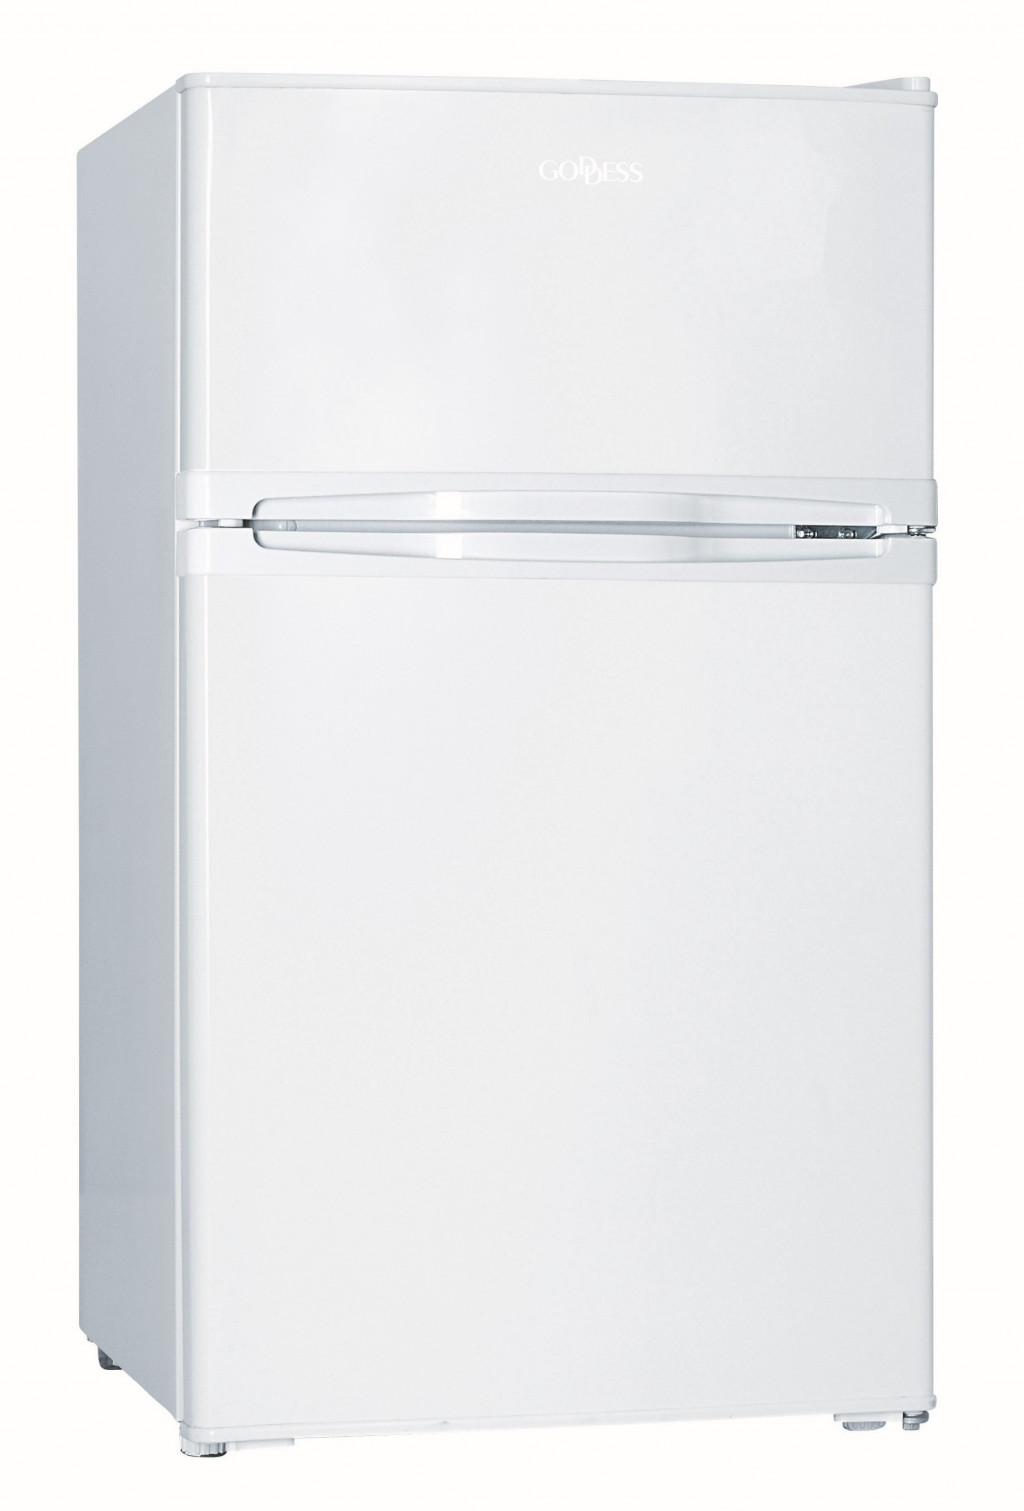 Goddess Refrigerator GODRDE085GW8AF Energy efficiency class F, Free standing, Double Door, Height 85 cm, Fridge net capacity 61 L, Freezer net capacity 24 L, 40 dB, White